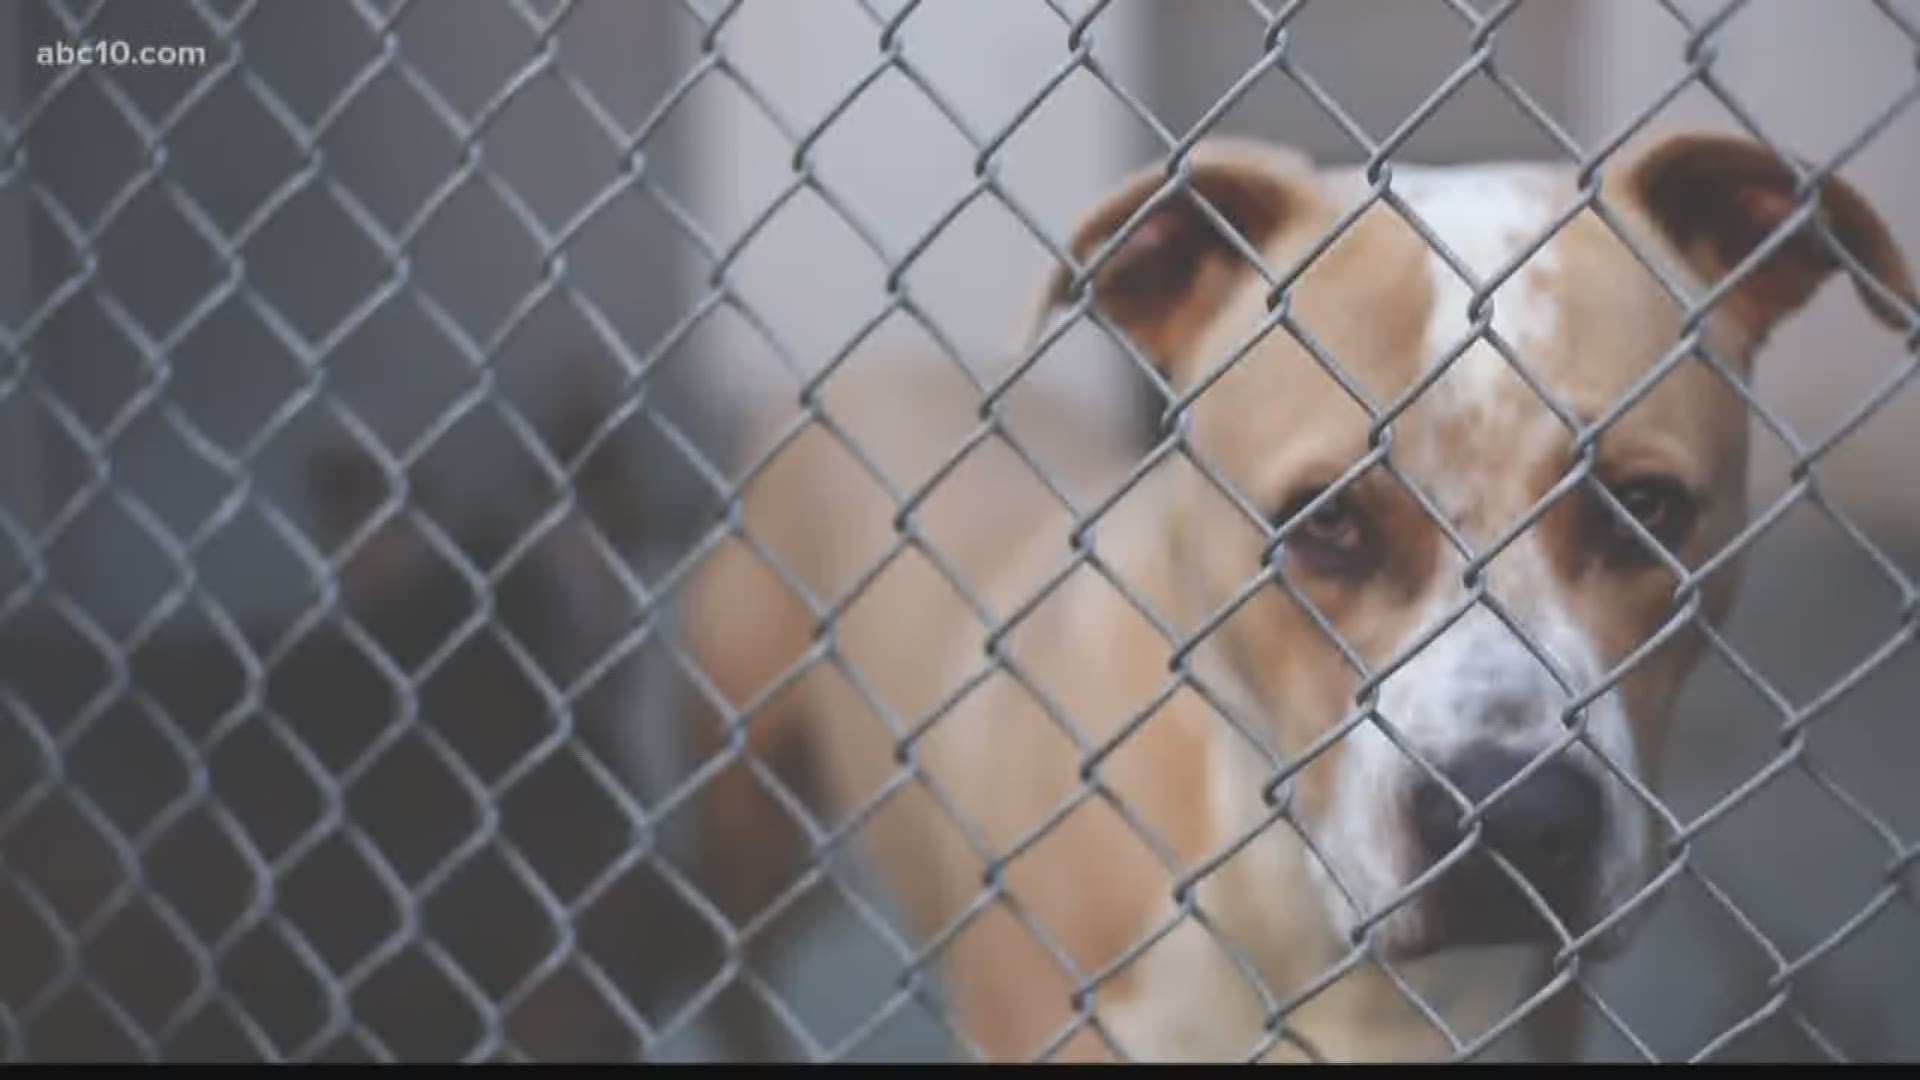 Sacramento animal shelter overcrowded, seeks community help 